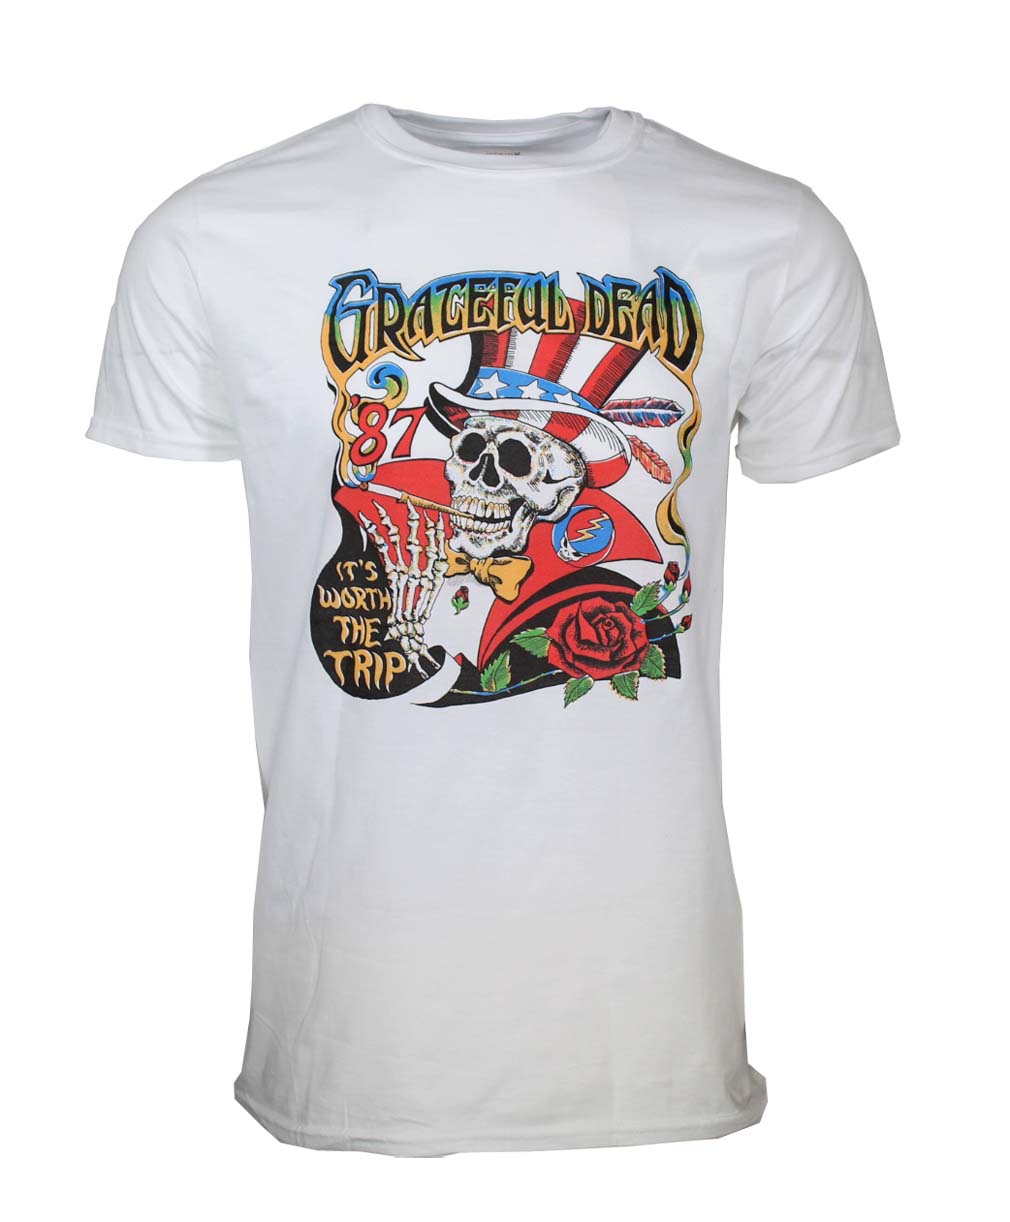 Grateful Dead It's Worth the Trip, '87 T-shirt